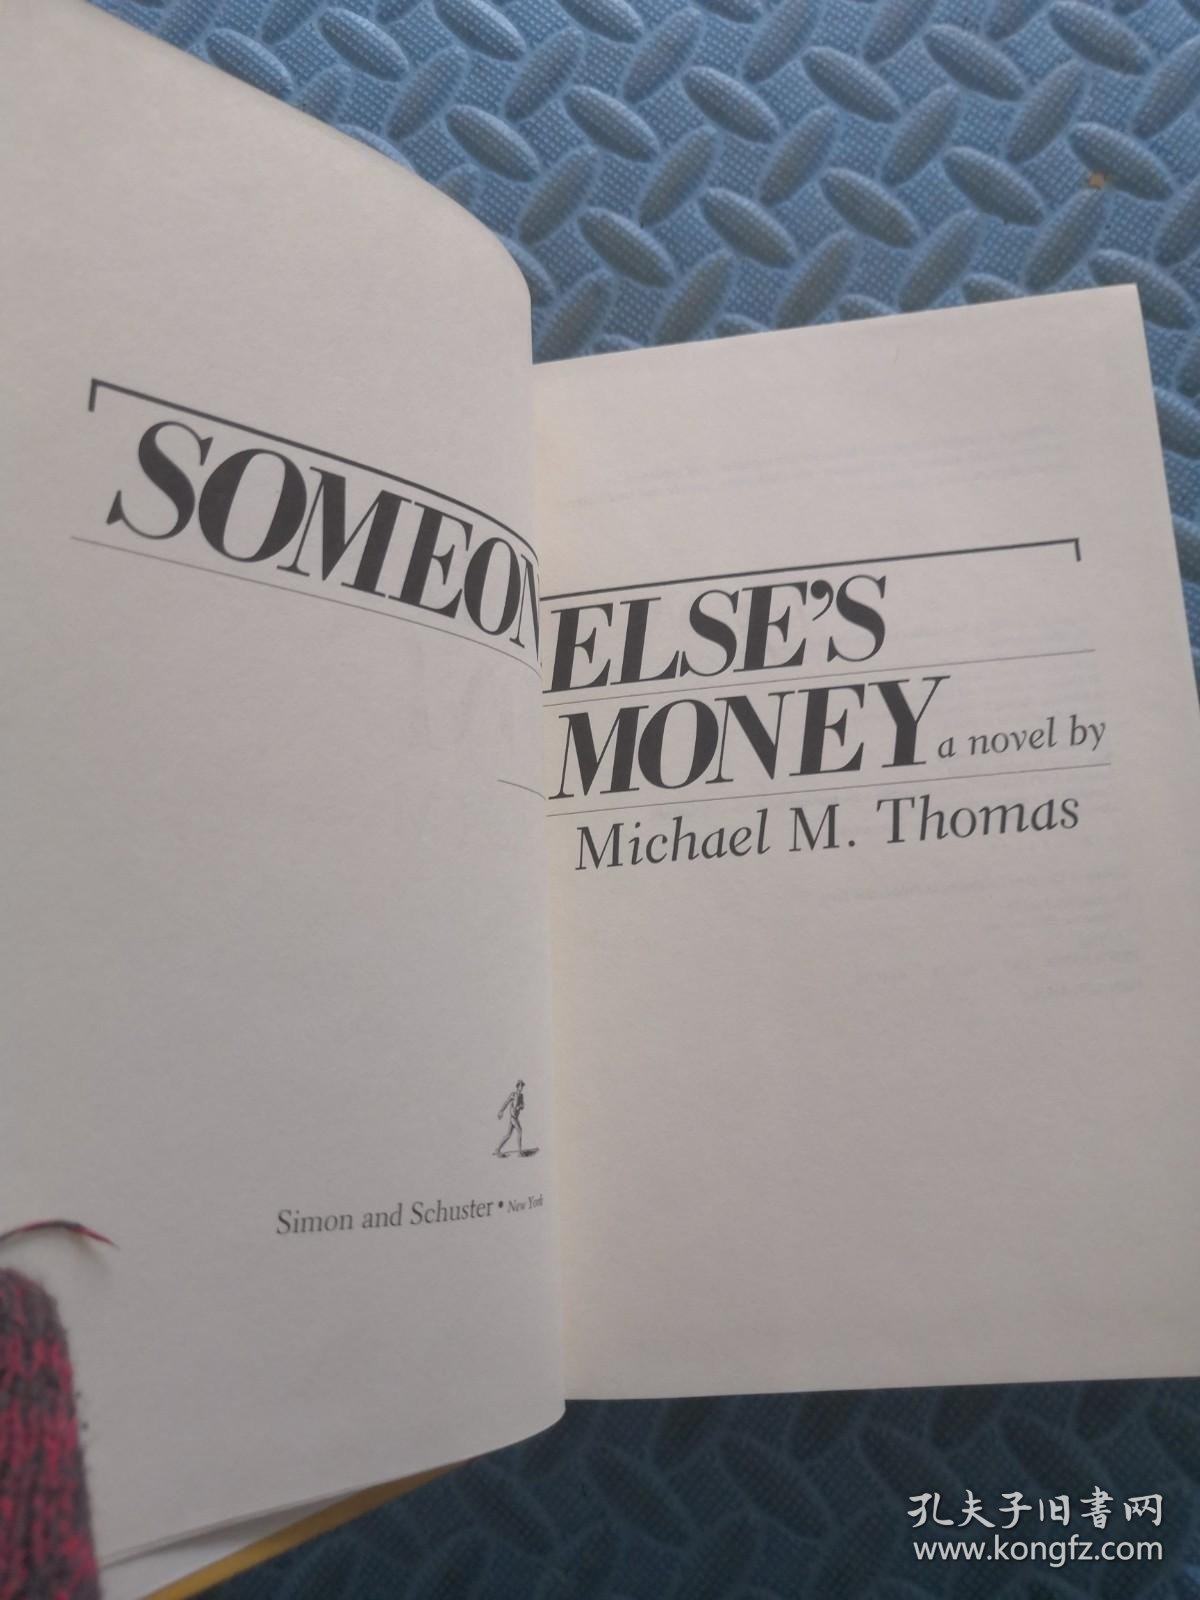 SOMEONE ELSES MONEY MICHAELM THOMAS